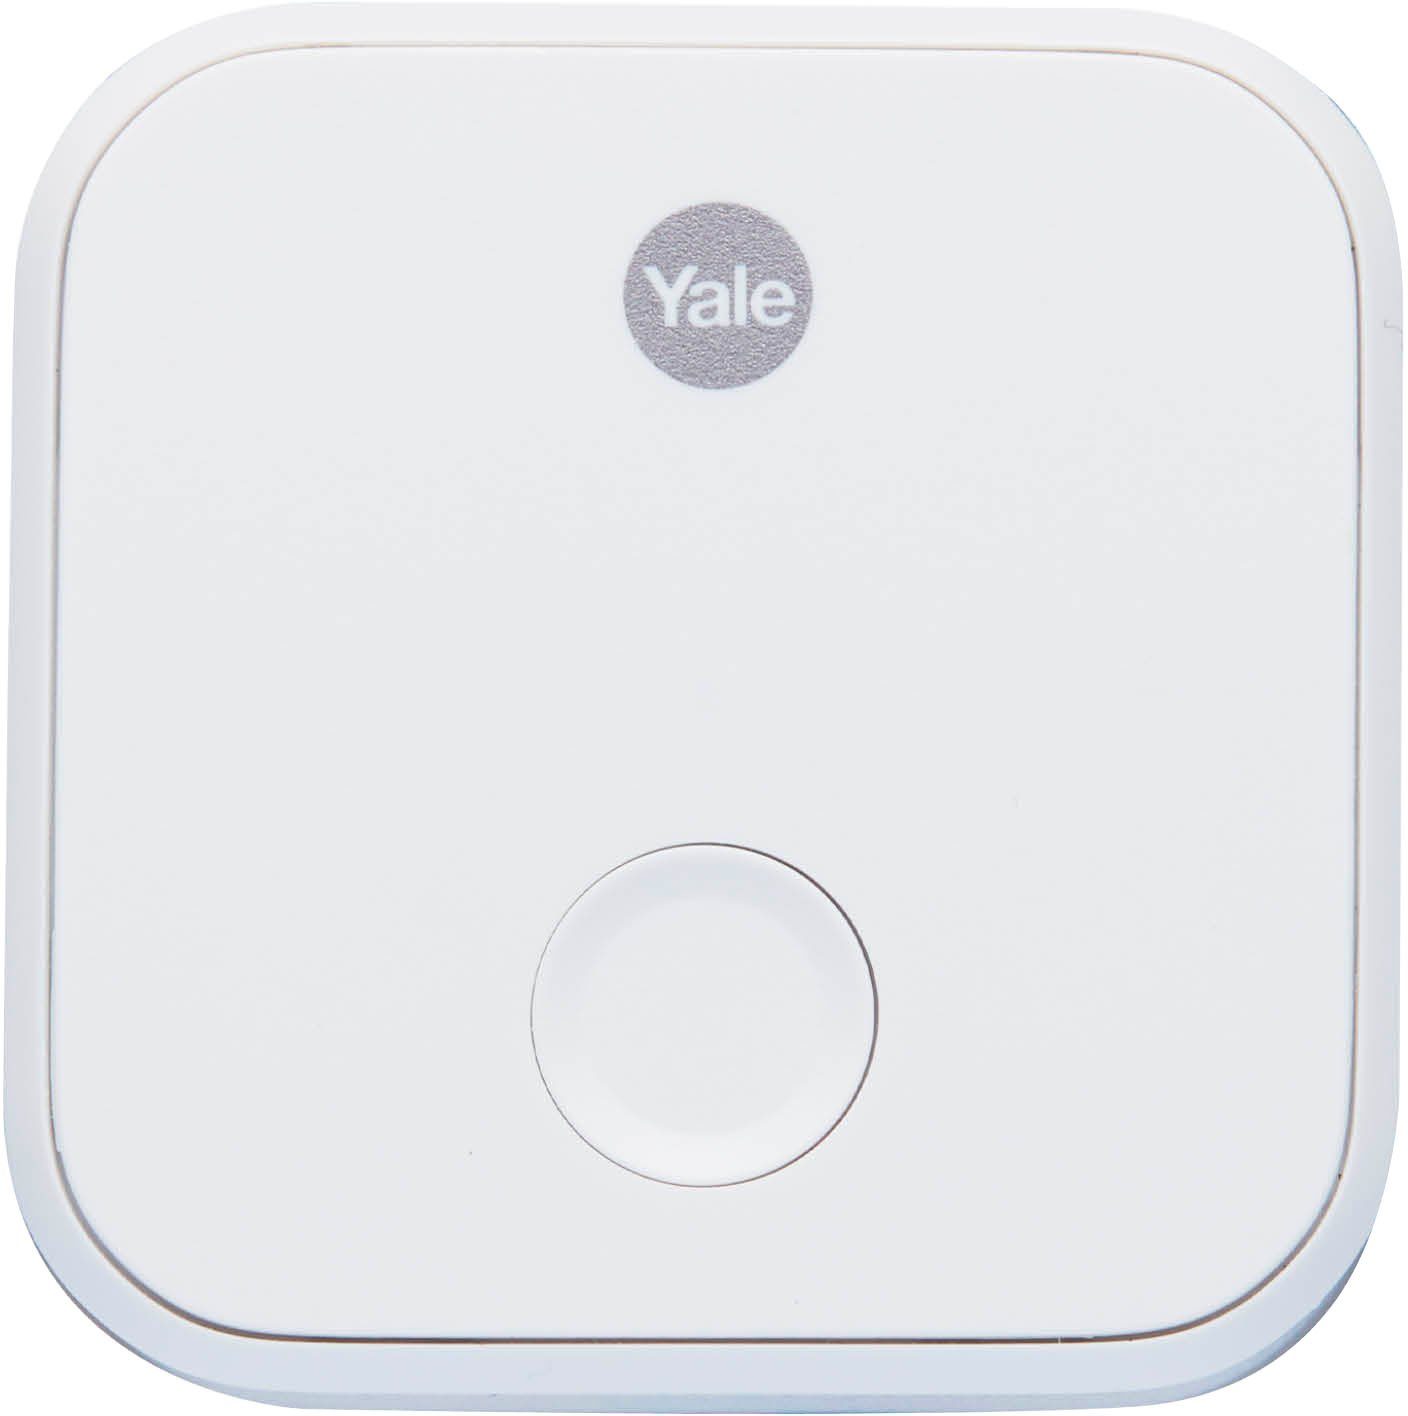 Yale Türschlossantrieb Linus Connect Türschlossantrieb | Smart Home Gateways